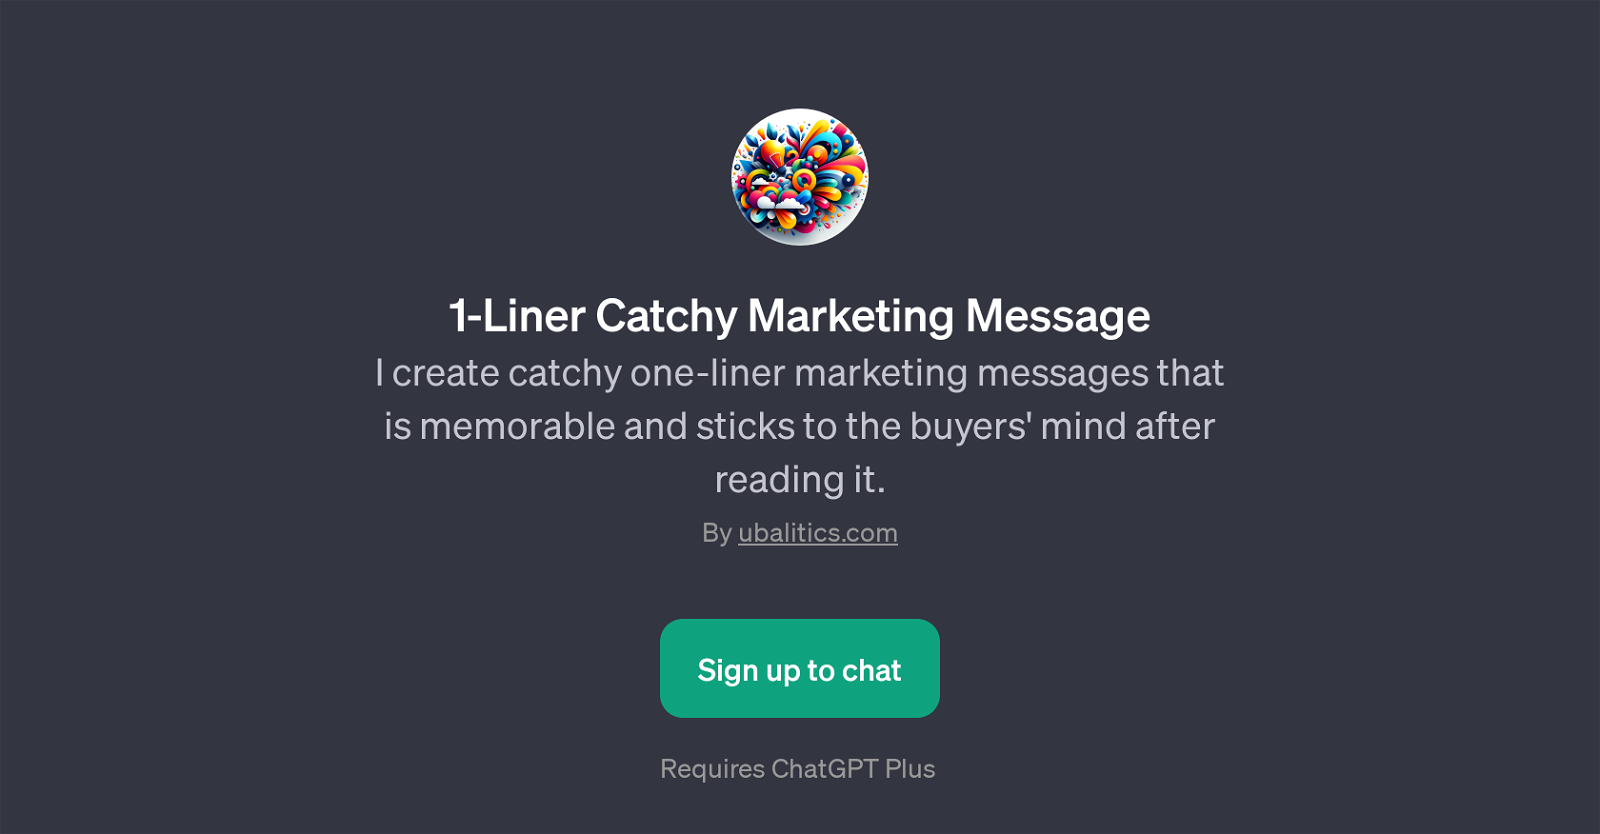 1-Liner Catchy Marketing Message website